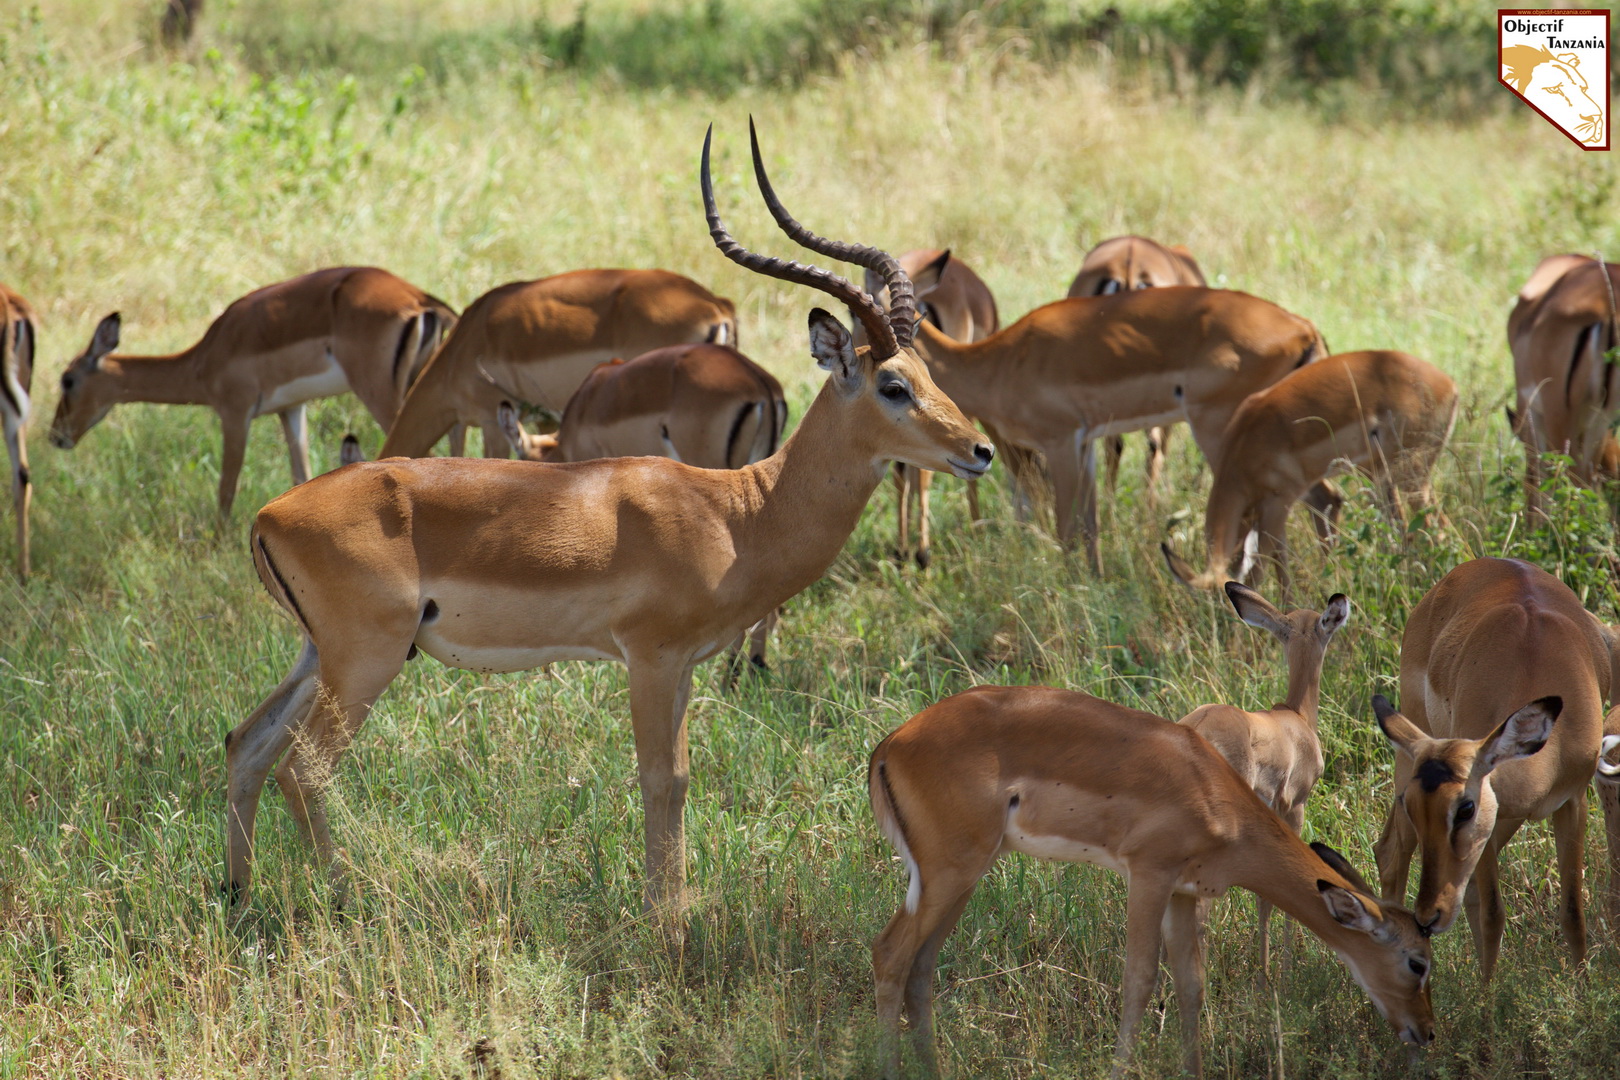 Votre safari à la carte en Tanzanie par OBJECTIF TANZANIA - Organisez votre safari sur mesure - safari de luxe